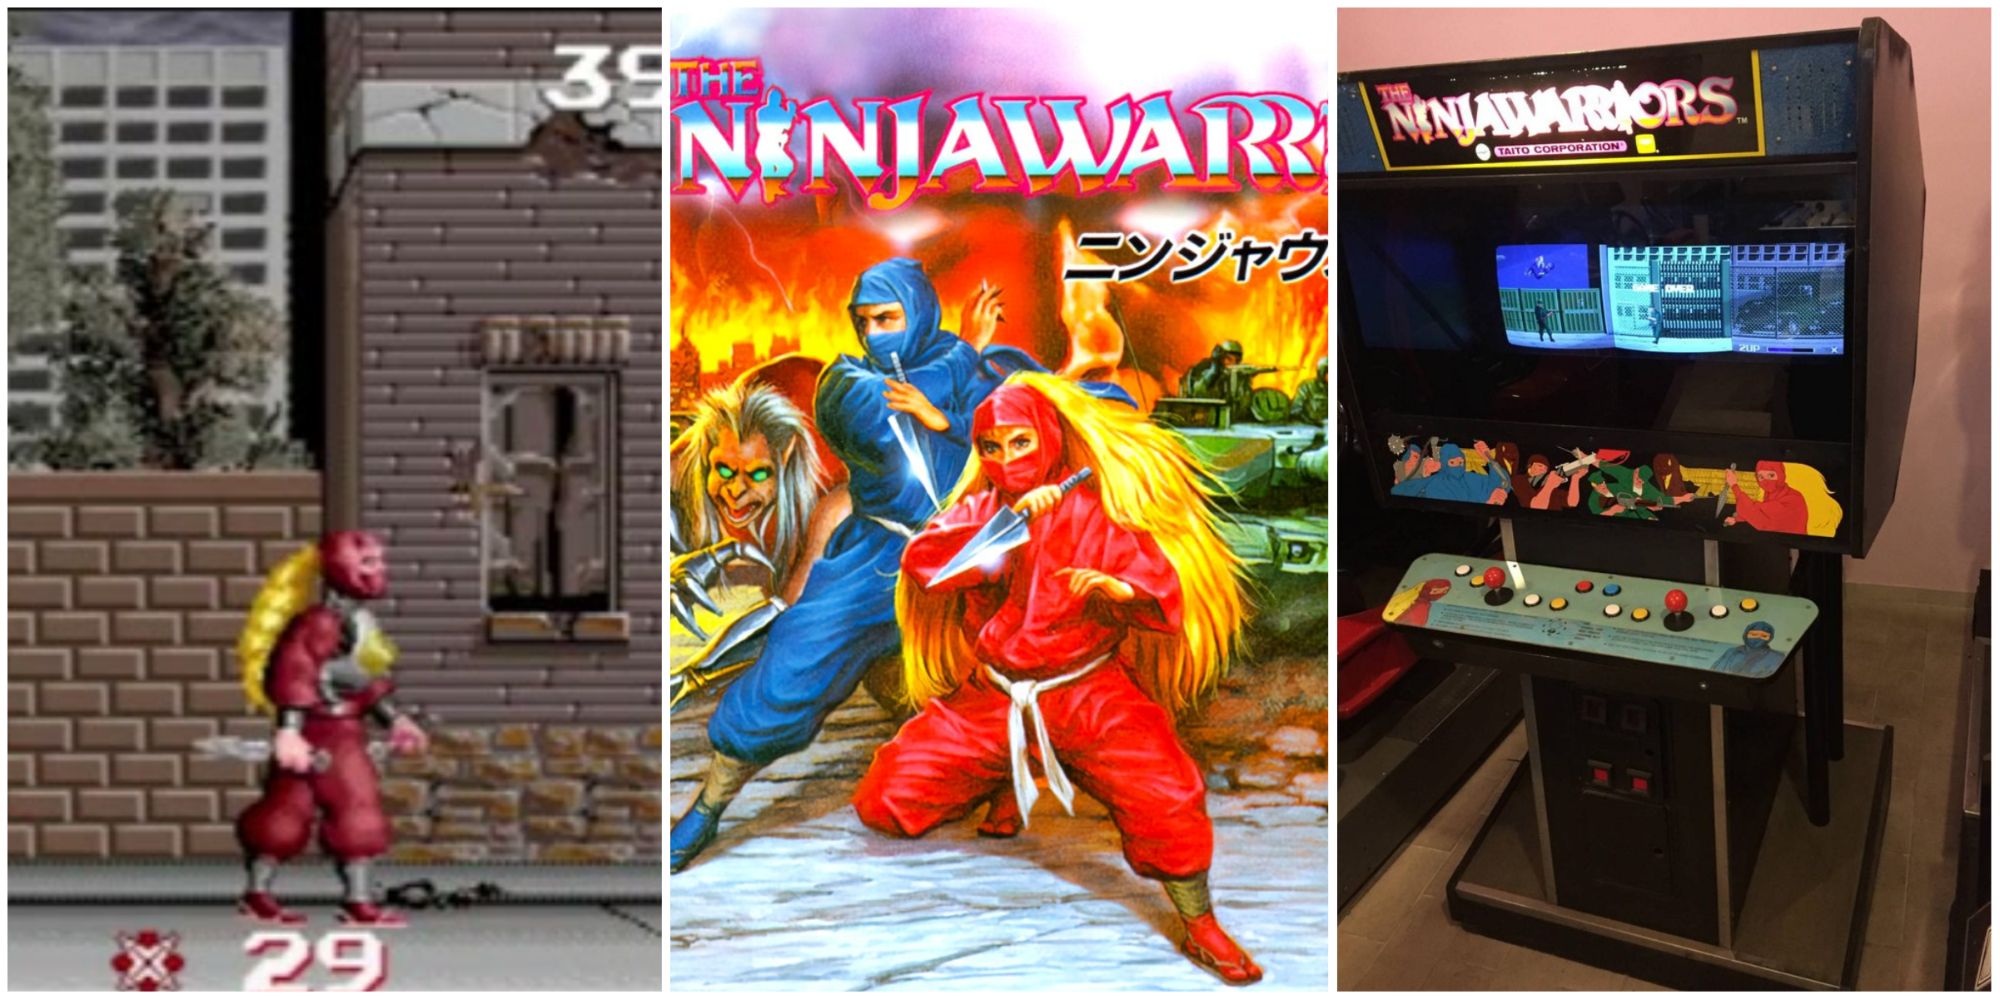 The Ninja Warriors Gameplay, The Ninja Warriors Box Art, The Ninja Warriors Arcade Cabinet